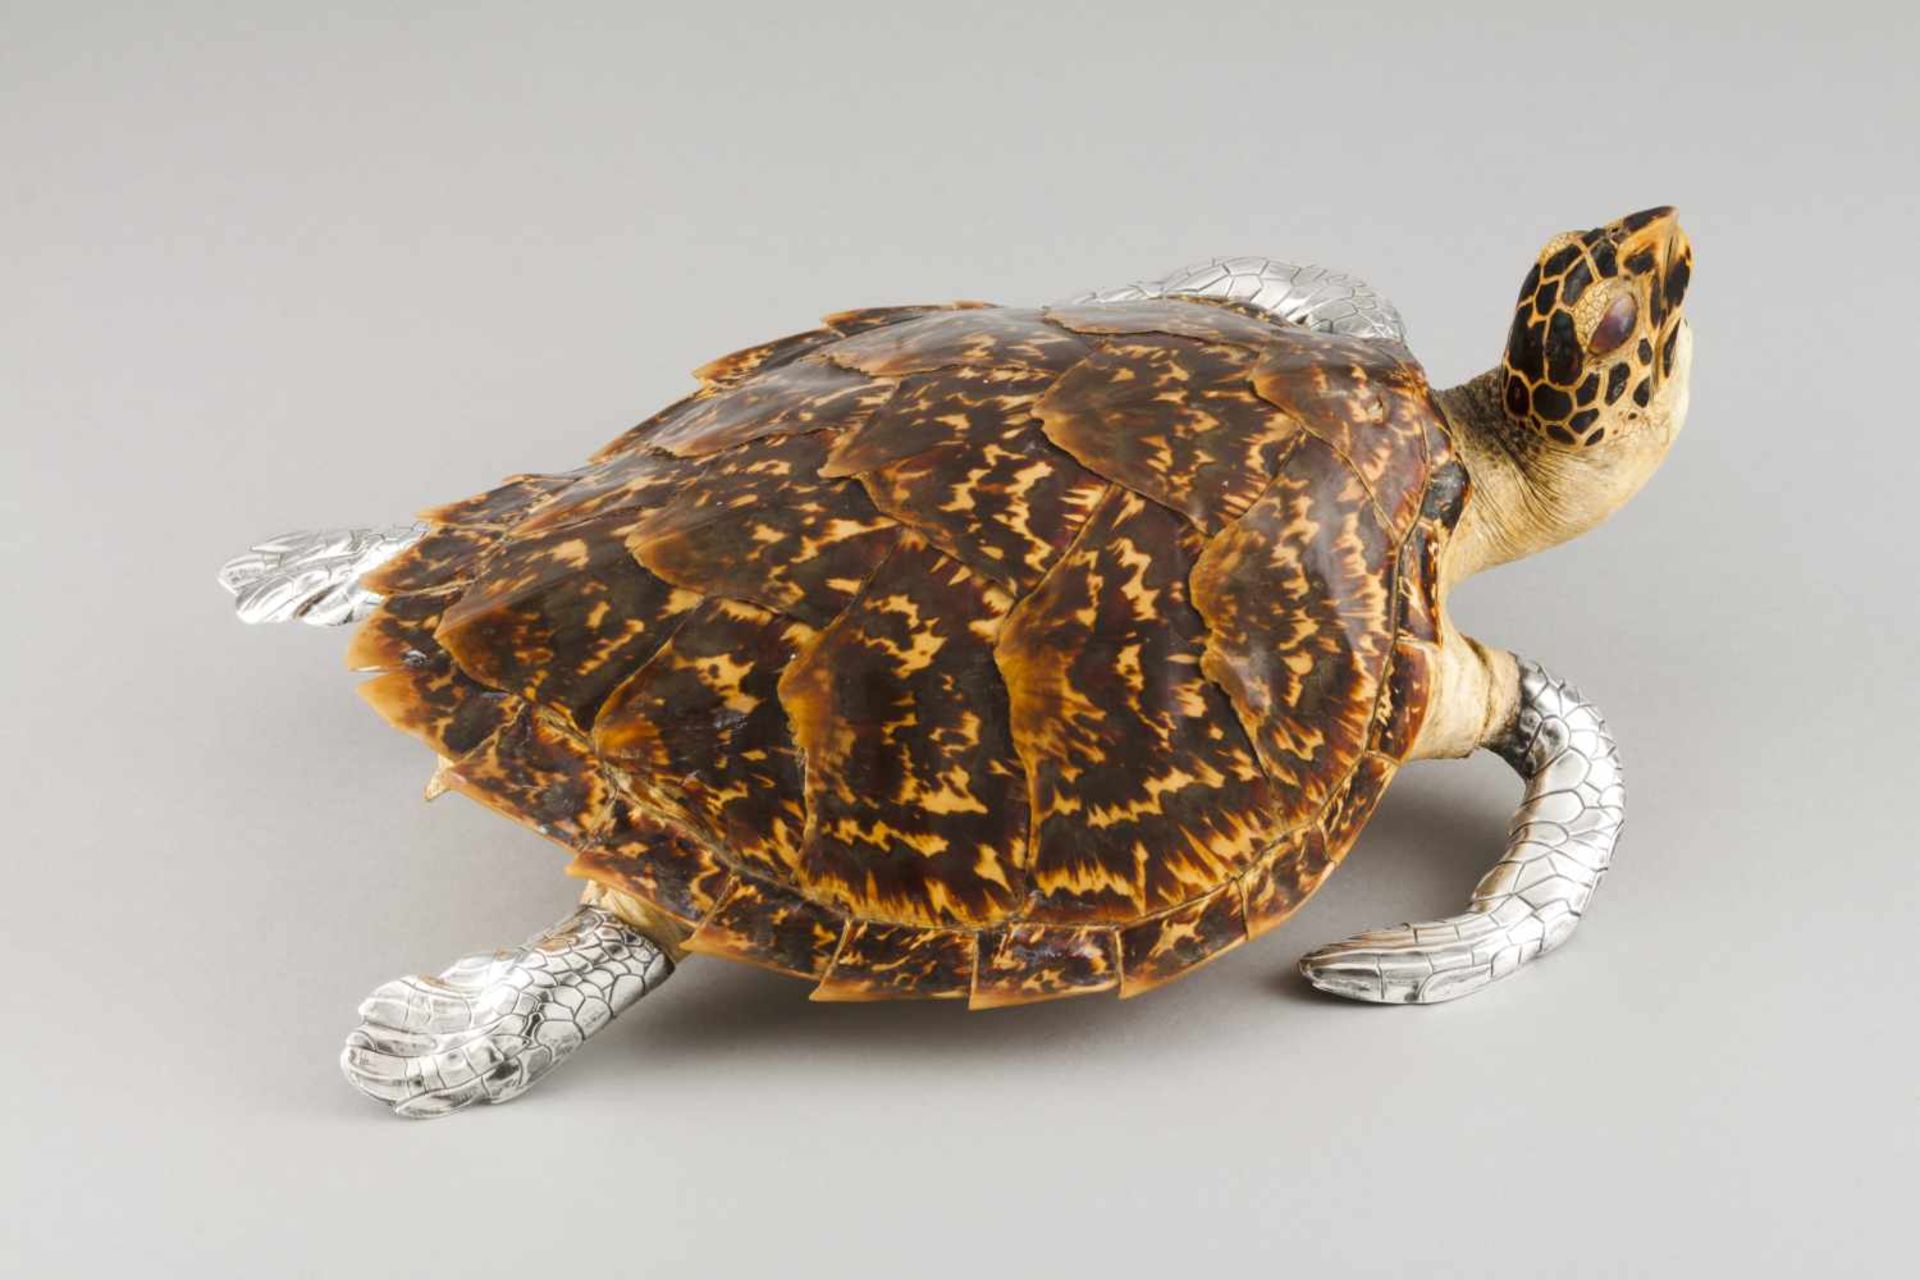 A Luiz Ferreira turtle